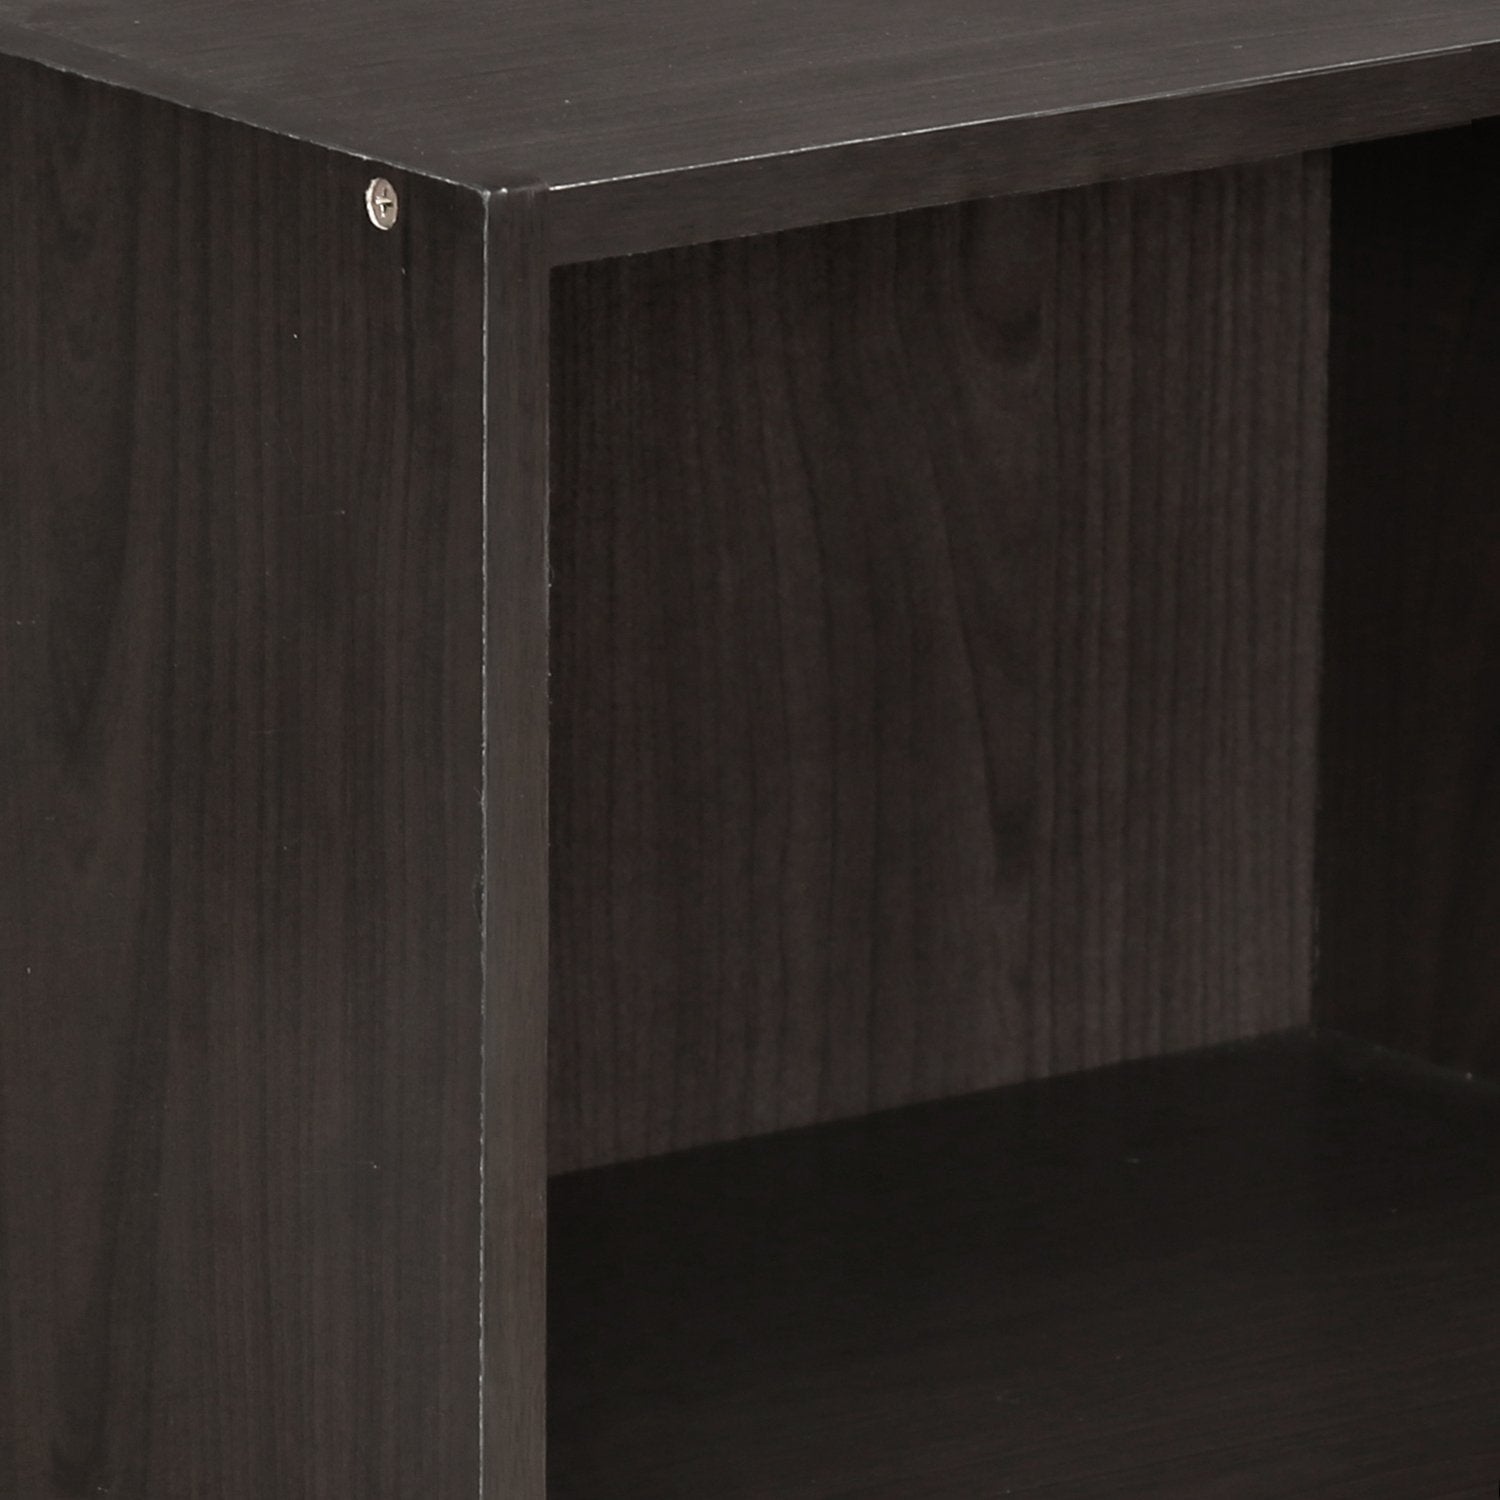 Lister 4 Shelf Cabinet (Brown)